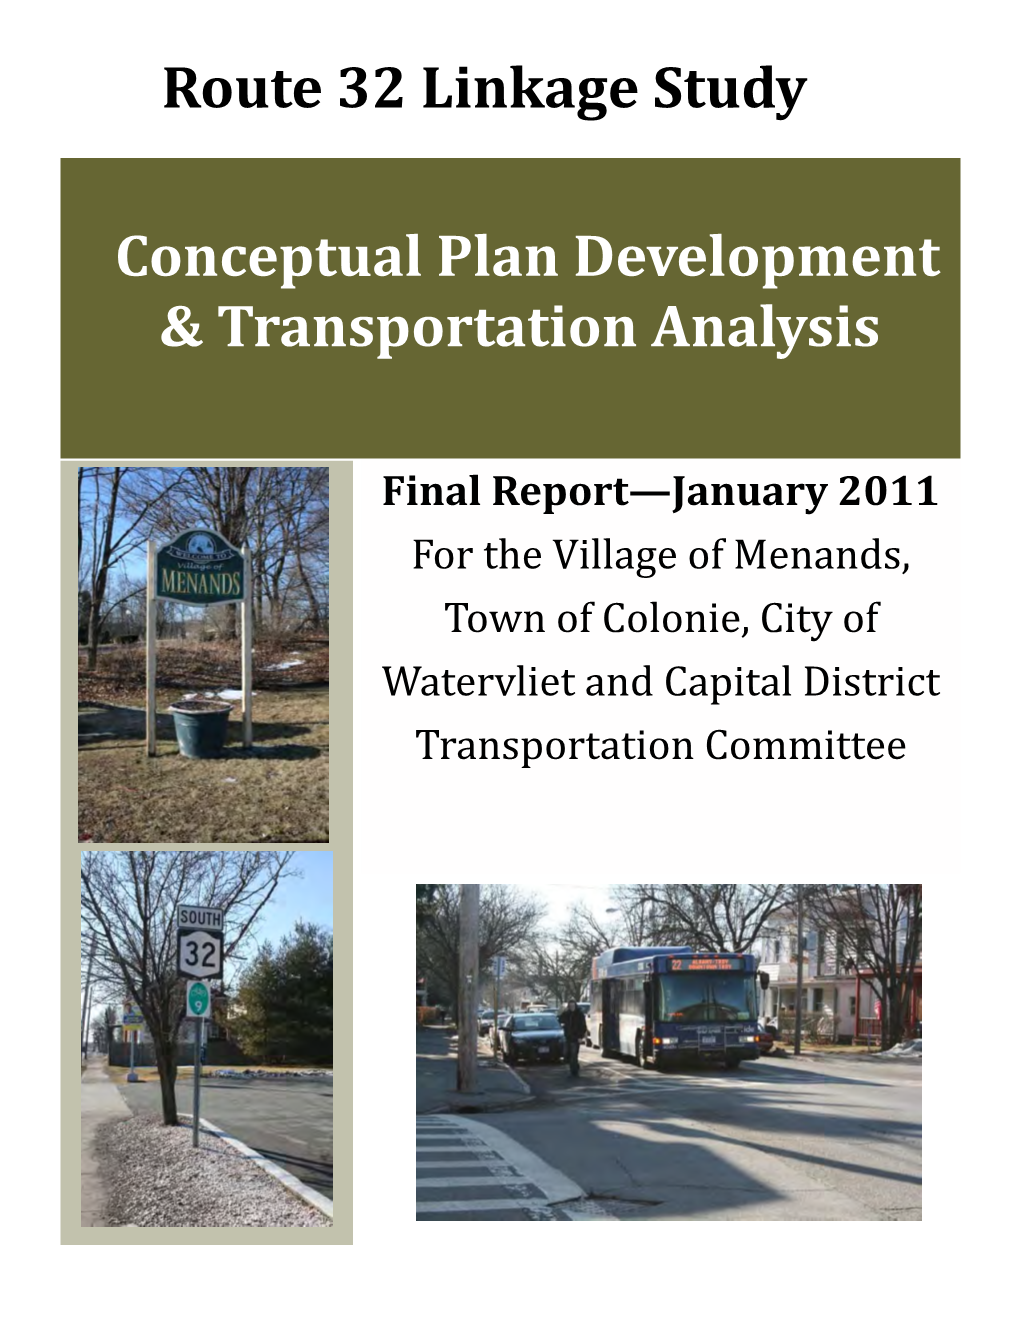 Route 32 Linkage Study Conceptual Plan Development & Transportation Analysis